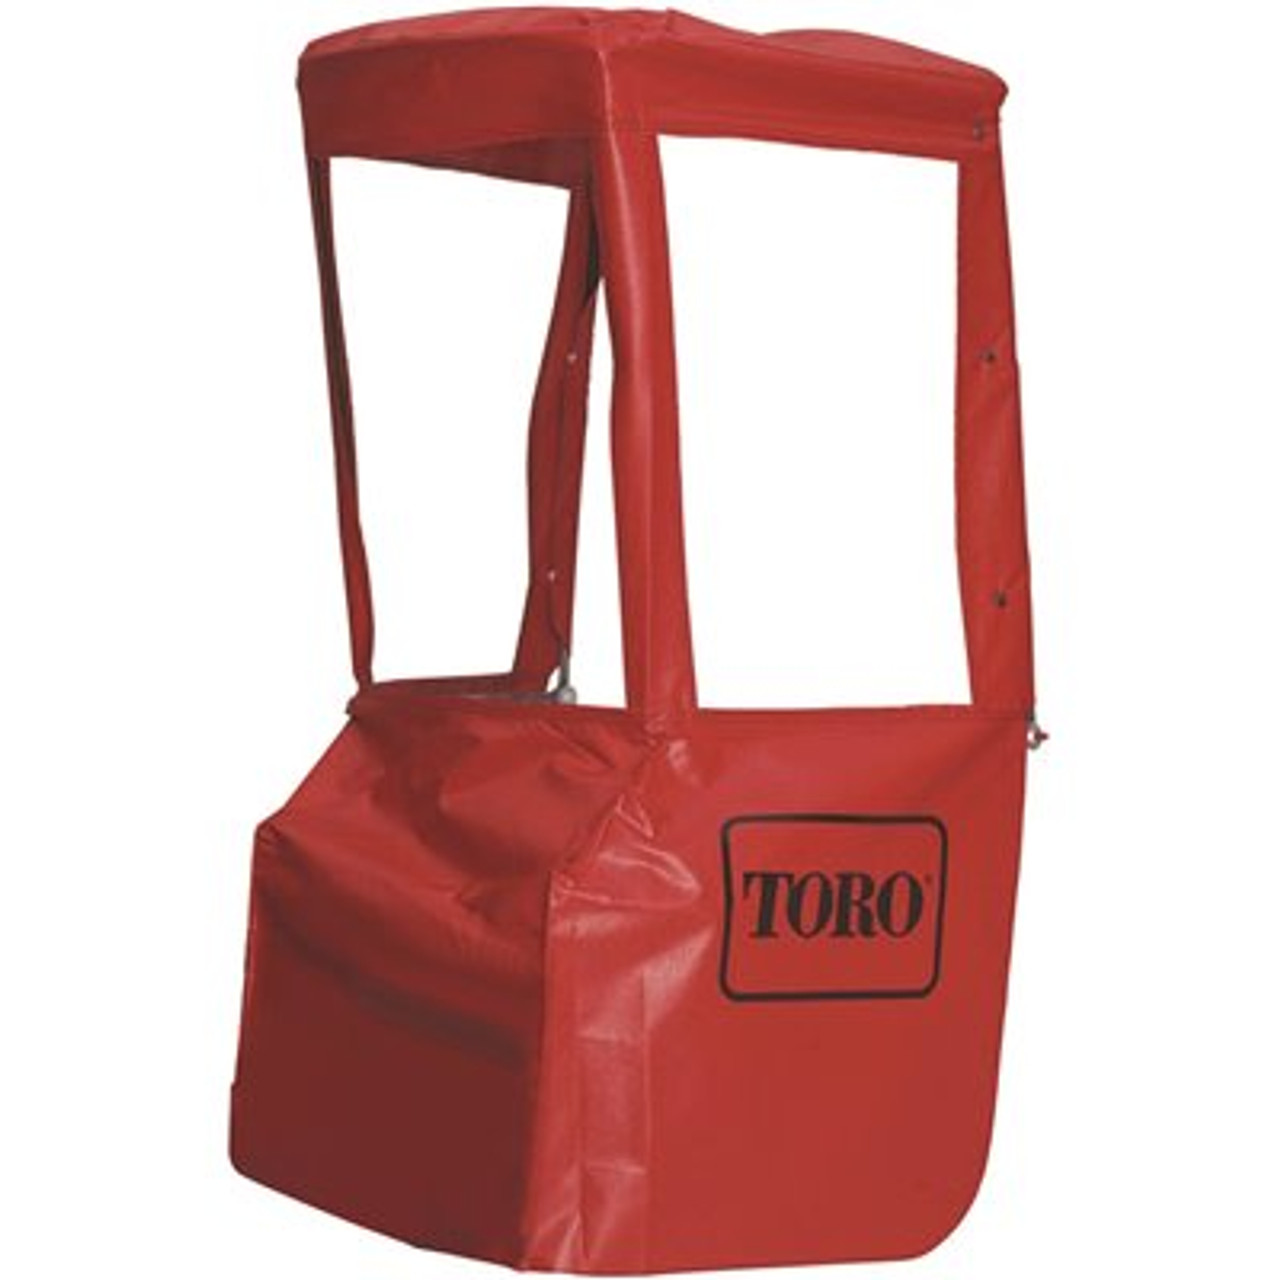 Toro Snow Cab Kit Accessory for Snow Blower